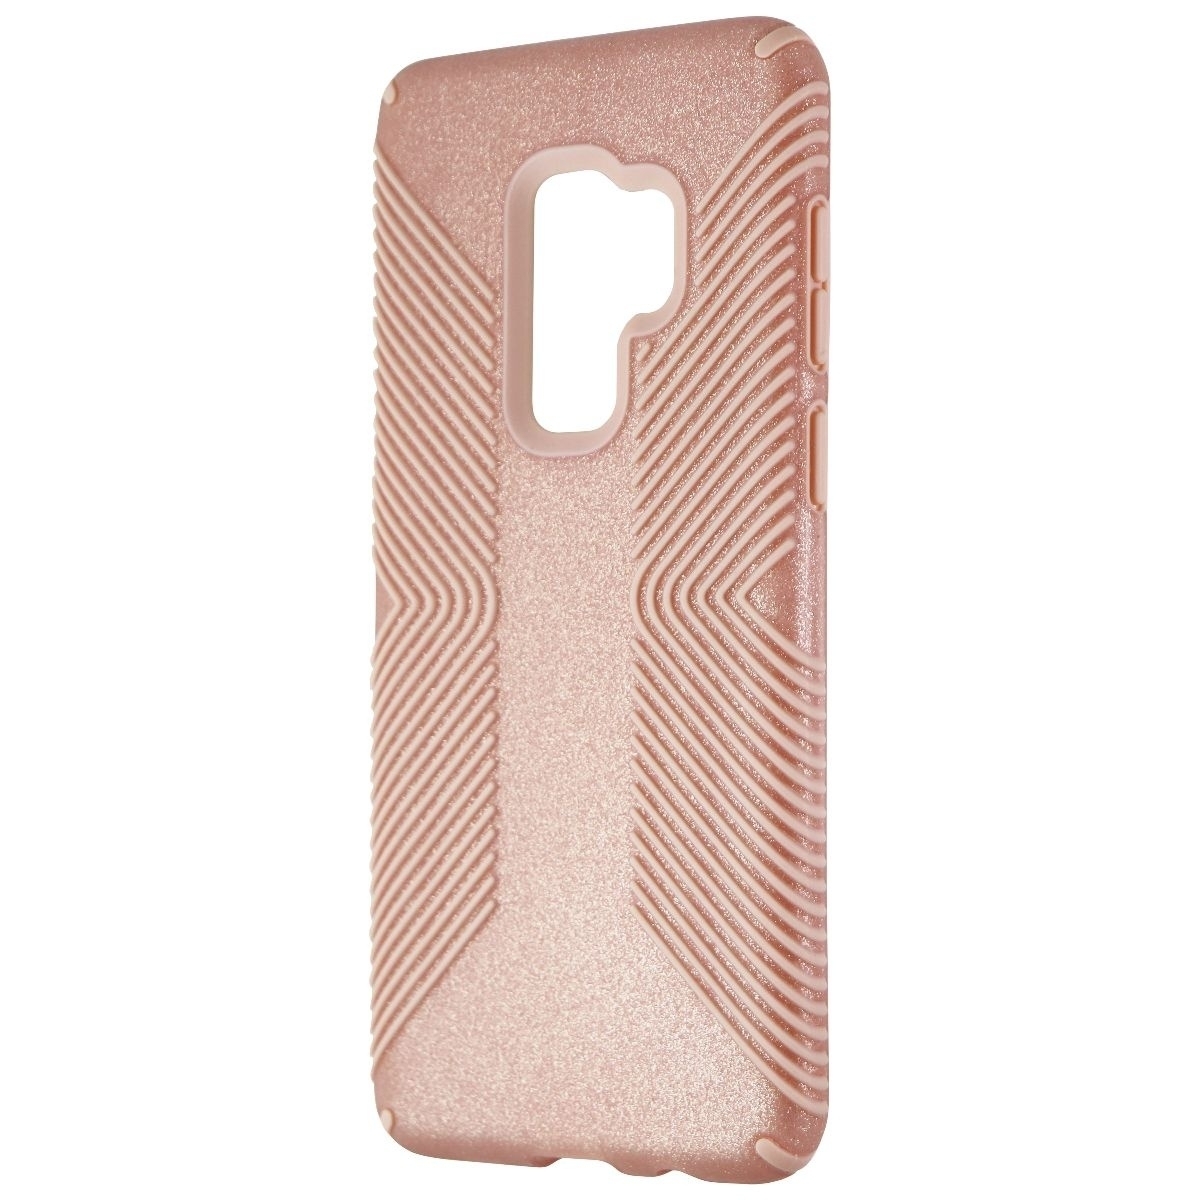 Speck Presidio Grip Glitter Series Hybrid Hard Case For Galaxy S9+ (Plus) - Pink